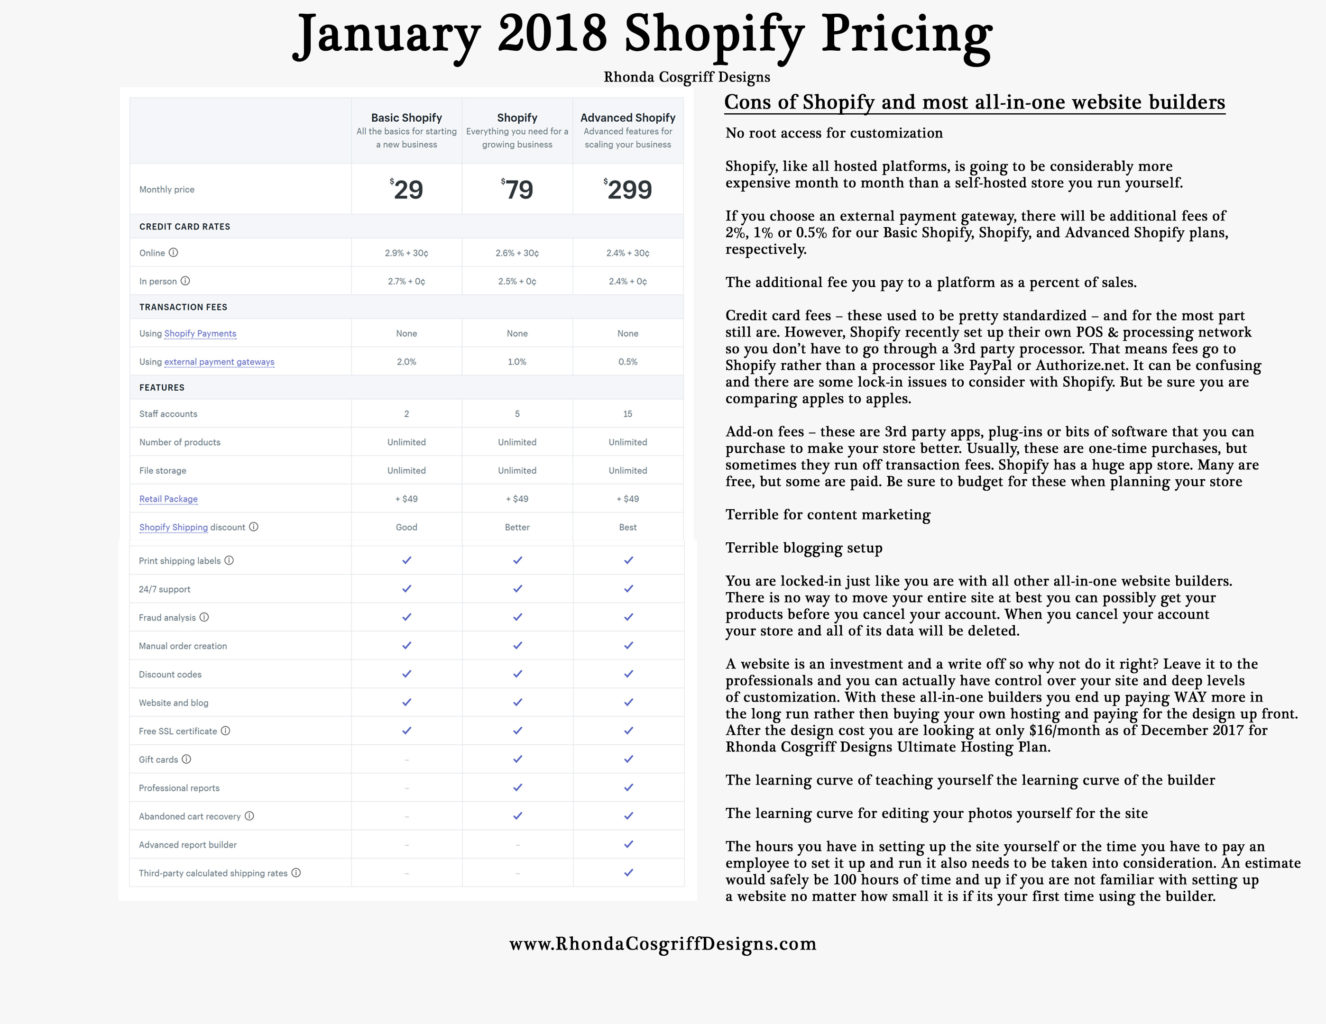 Shopify Pricing comparision 